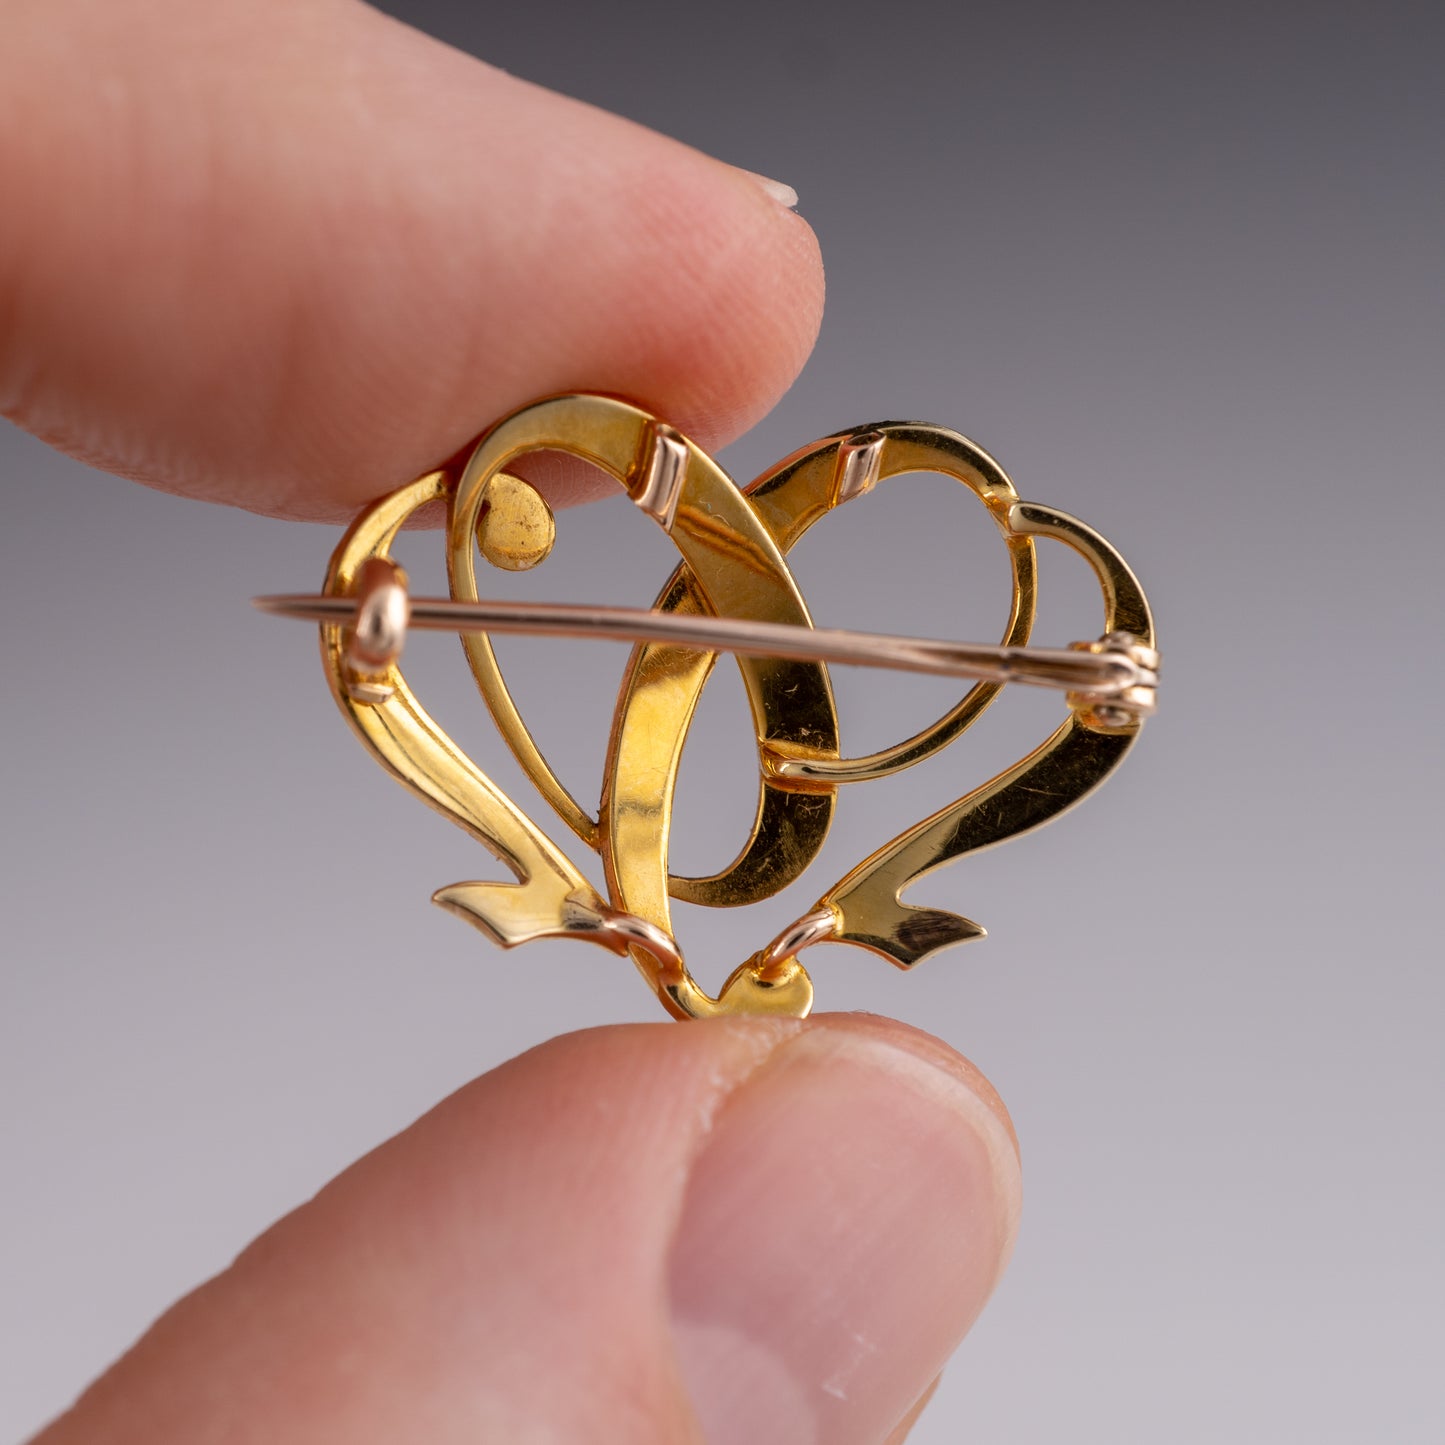 15ct Gold Art Nouveau Period Pearl Heart Brooch - Hunters Fine Jewellery